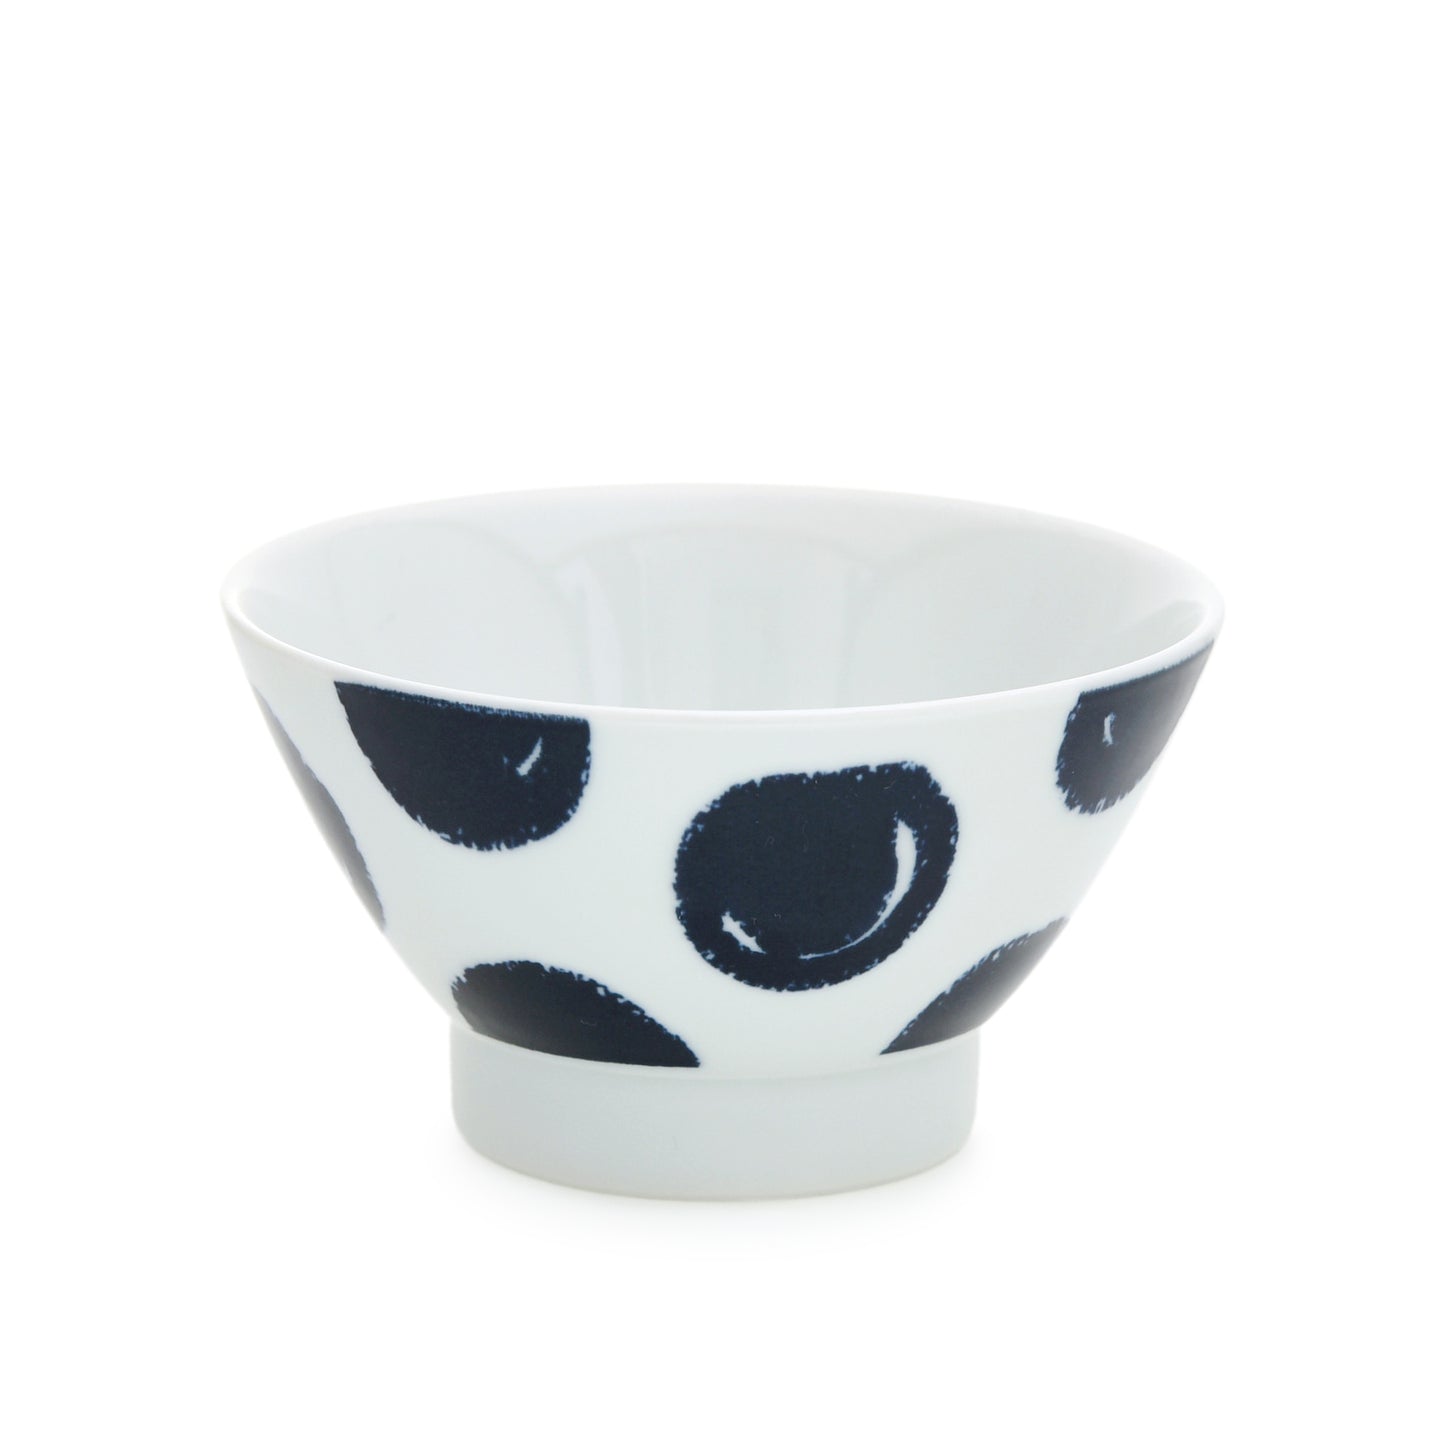 [Hasami ware] [natural69] [SWATCH] [Tea bowl] Kurawanka bowl Rice bowl Tableware Nordic fashion